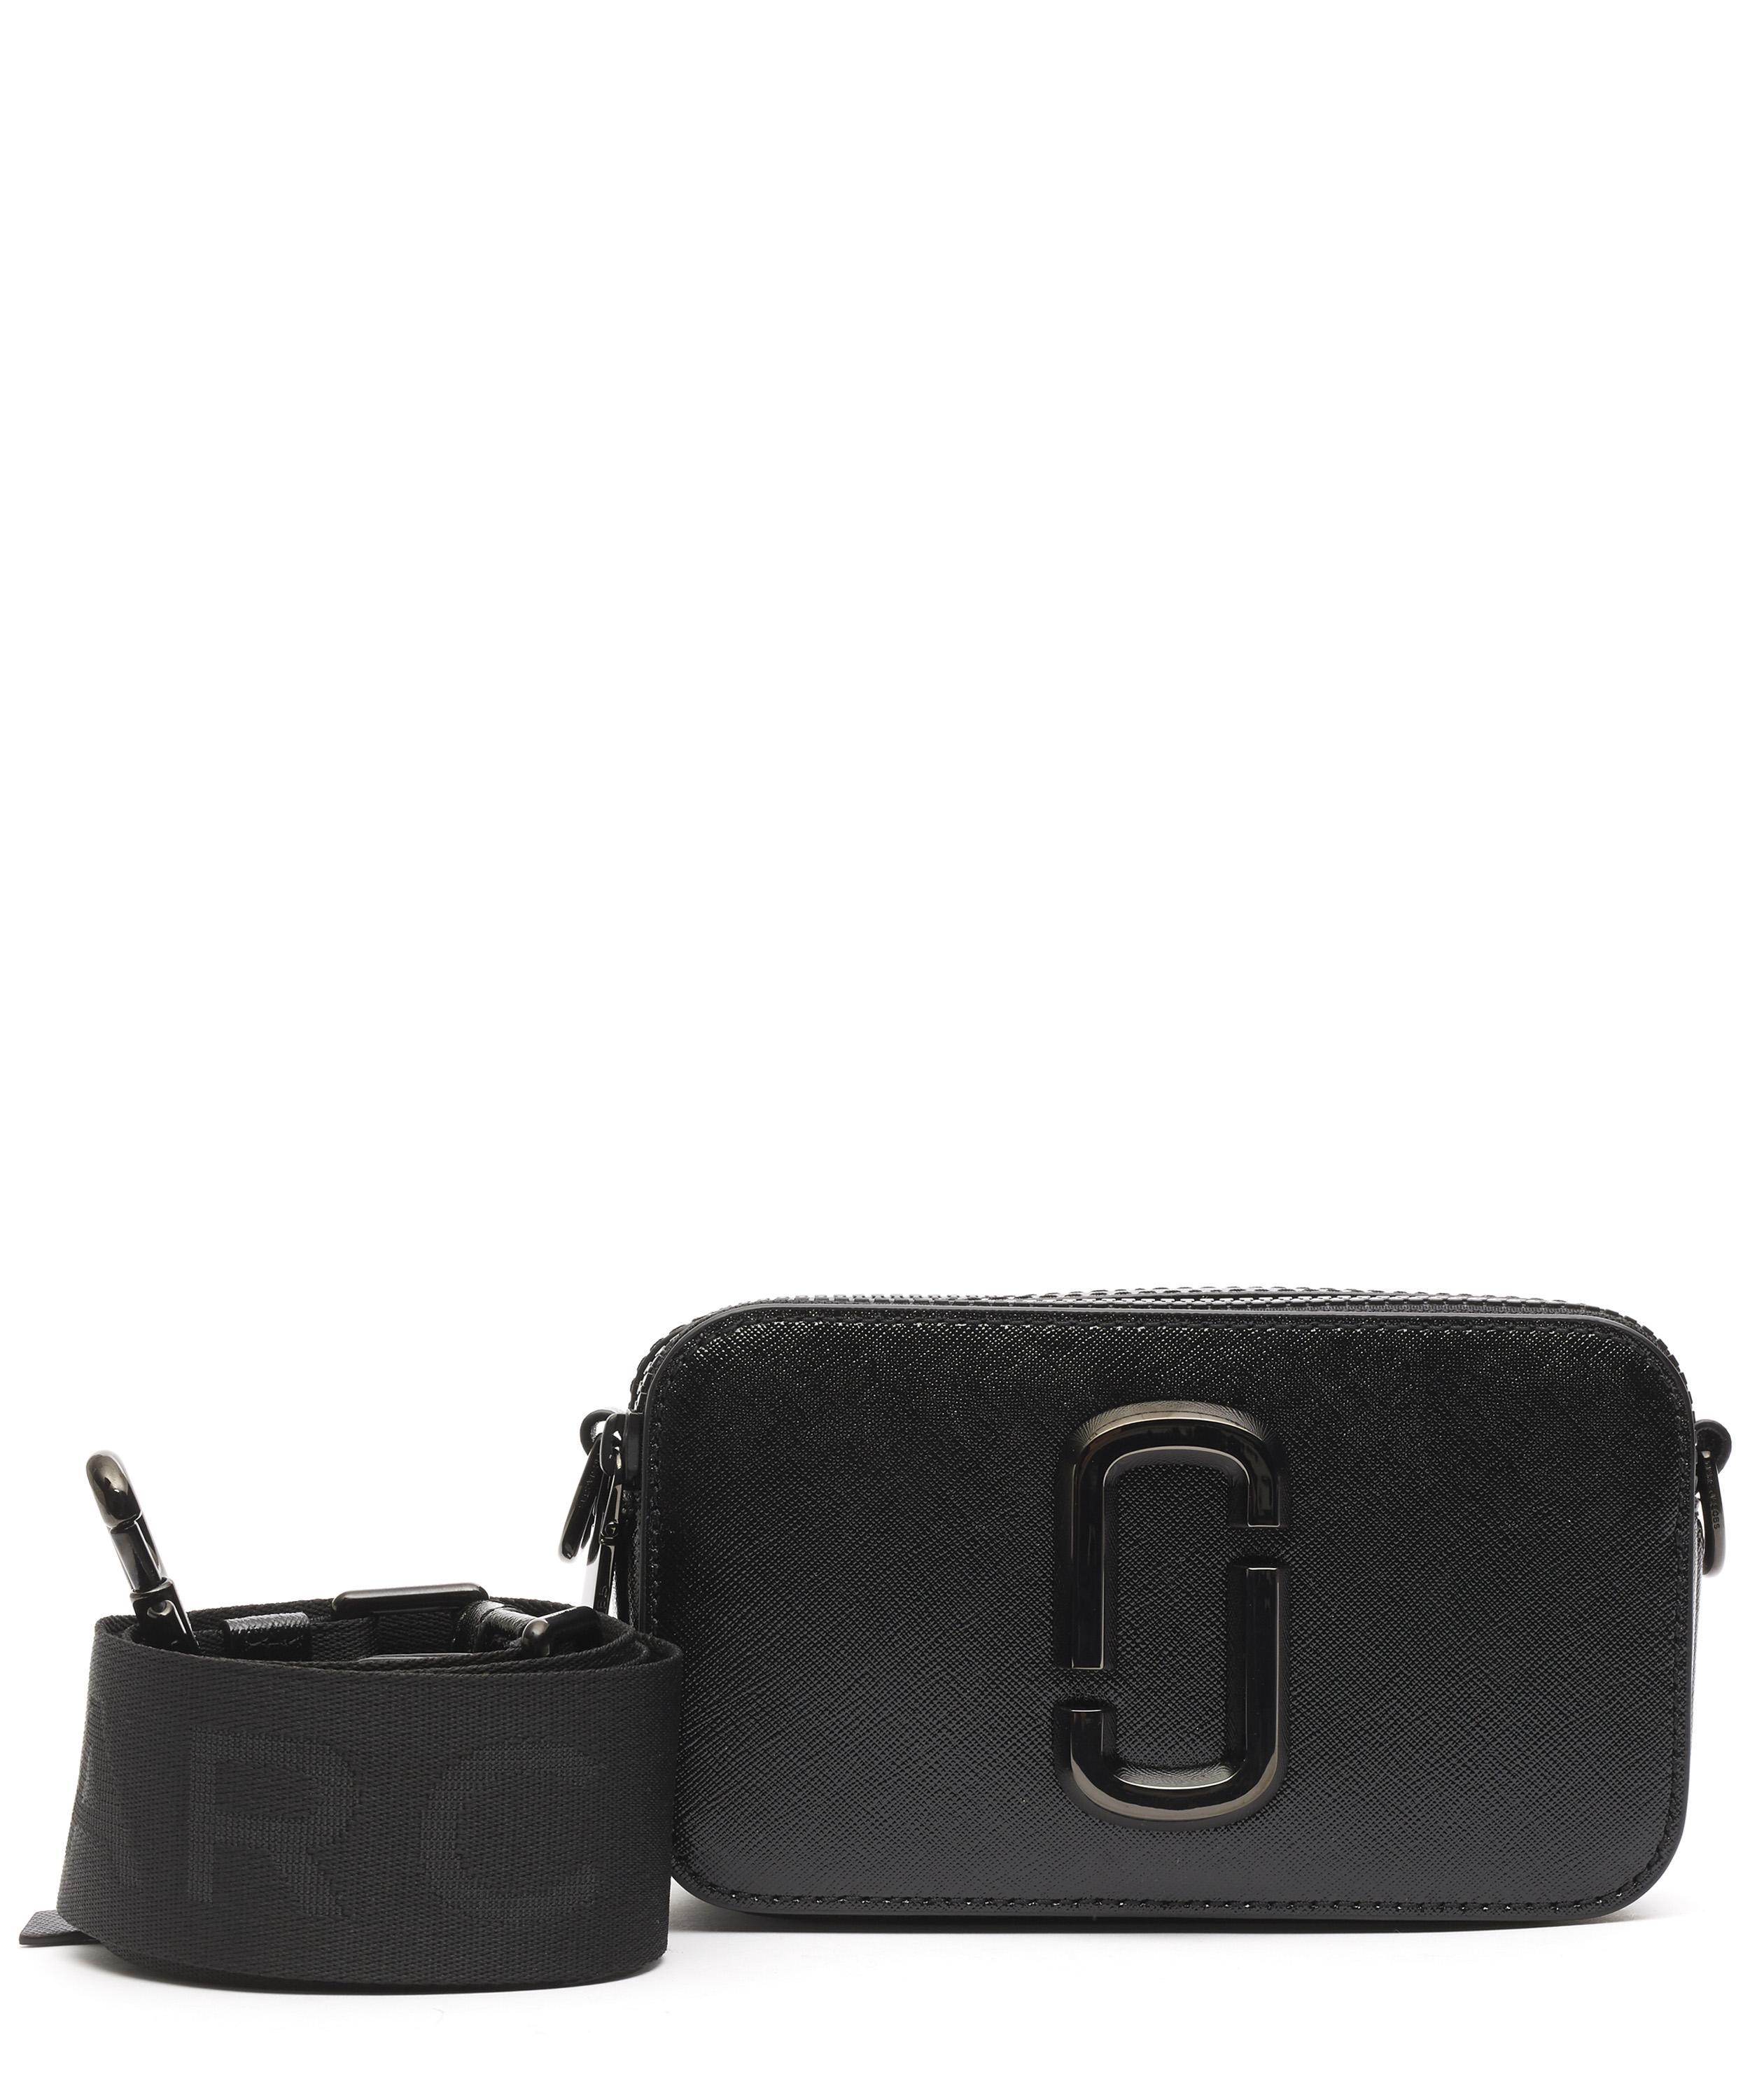 Lyst - Marc Jacobs Snapshot Dtm Small Cross-body Bag in Black